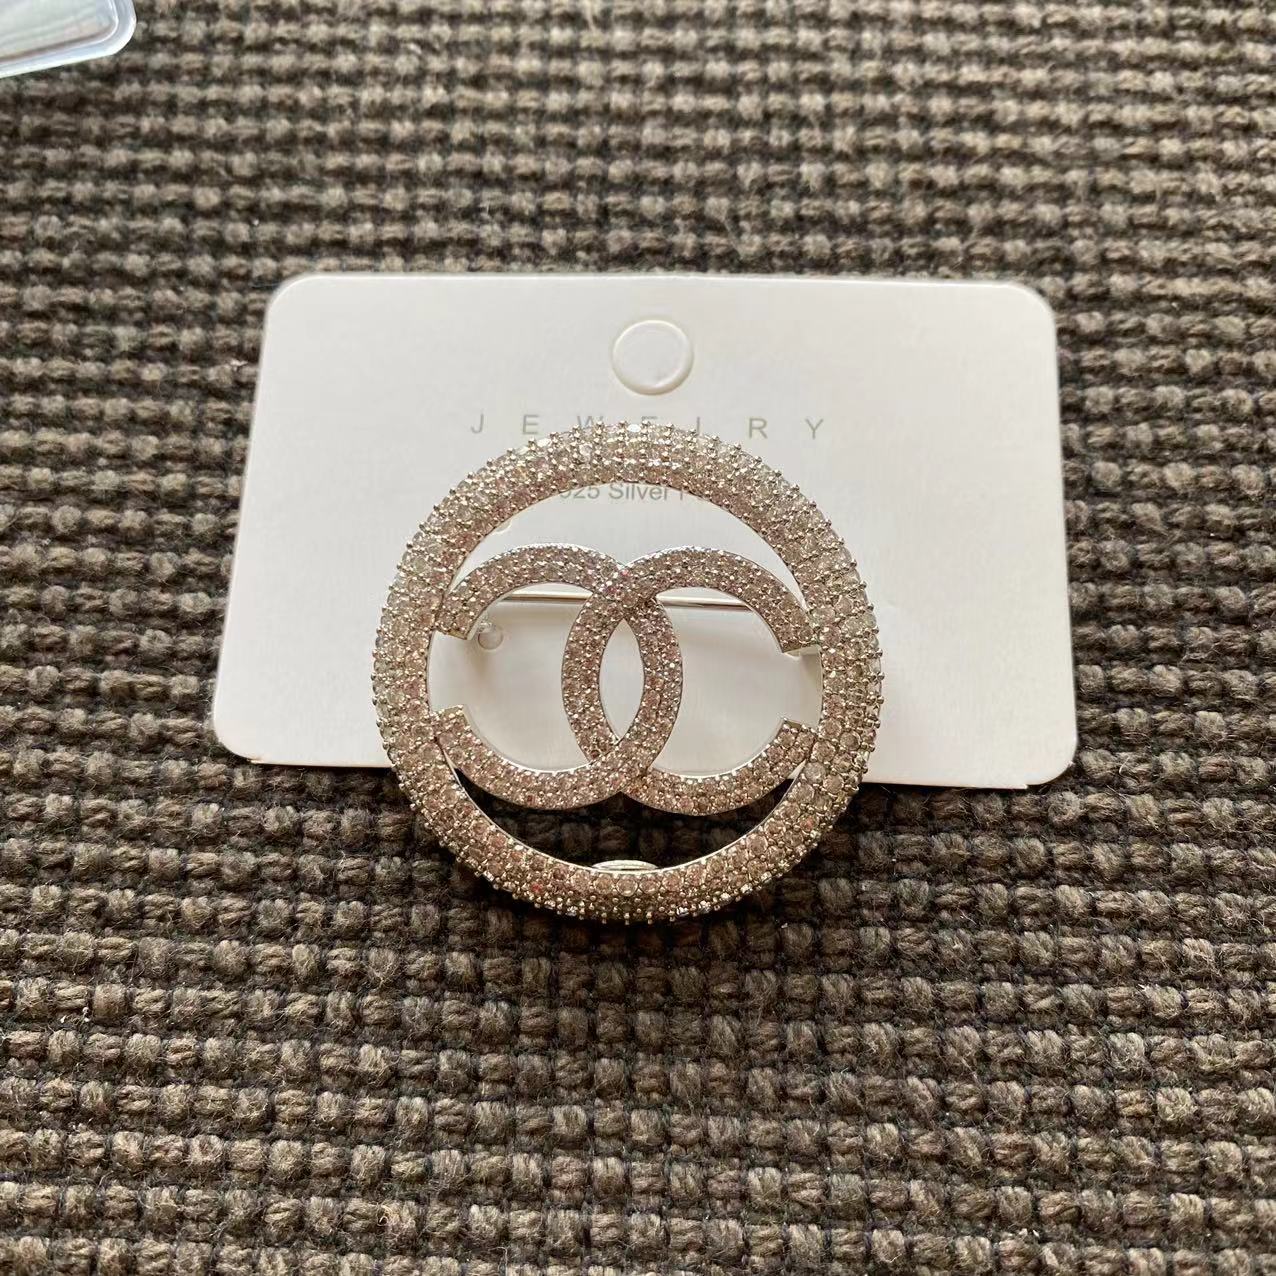 Big sale! New Chanel crystal brooch